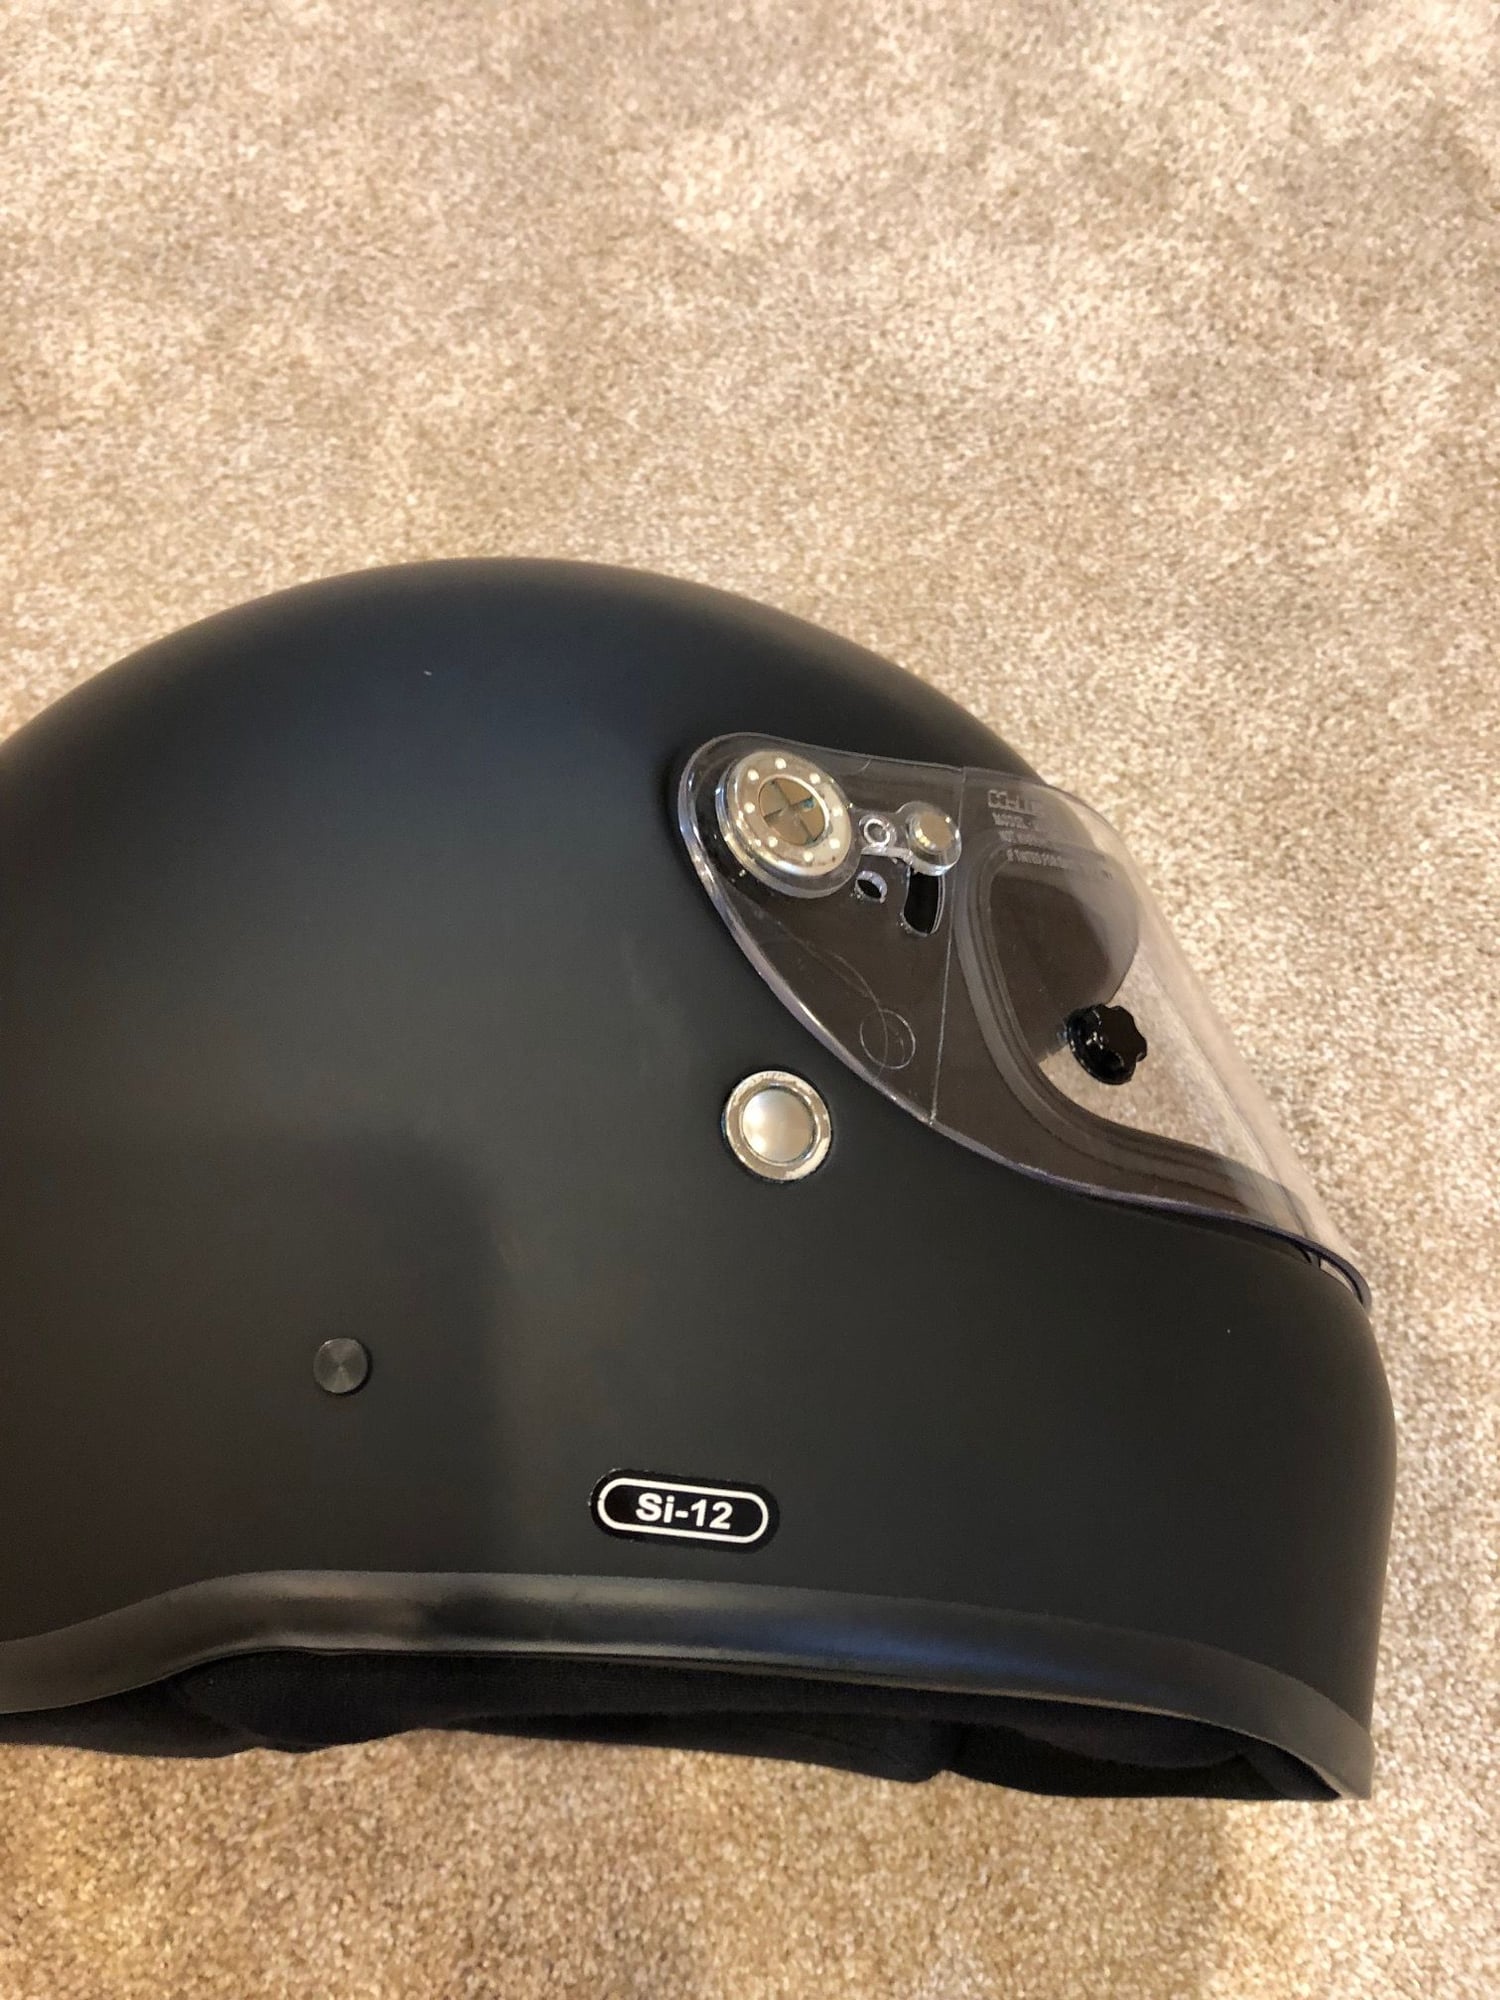 Miscellaneous - HJC si-12 Helmet - Medium - Used - Cleveland, OH 44124, United States